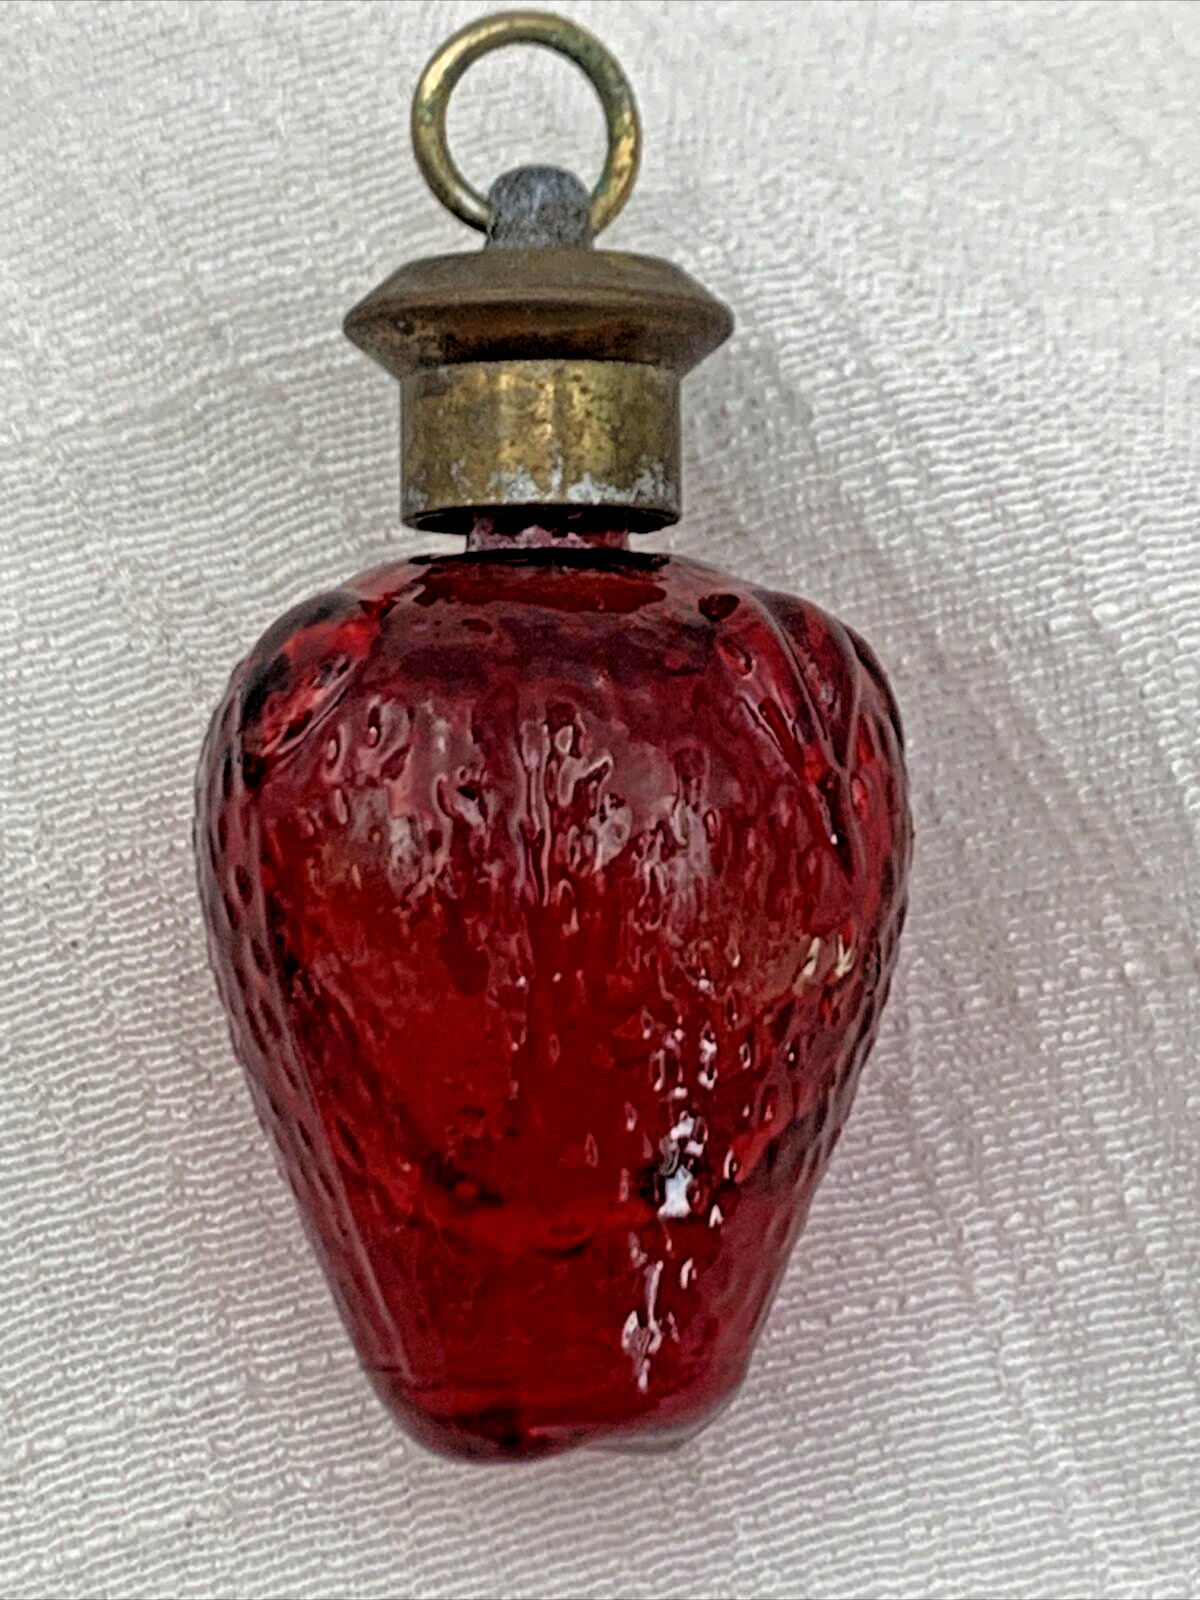 VTG Empty 1970s Max Factor Red Glass Wild Strawberry Musk Perfume Pendant Bottle